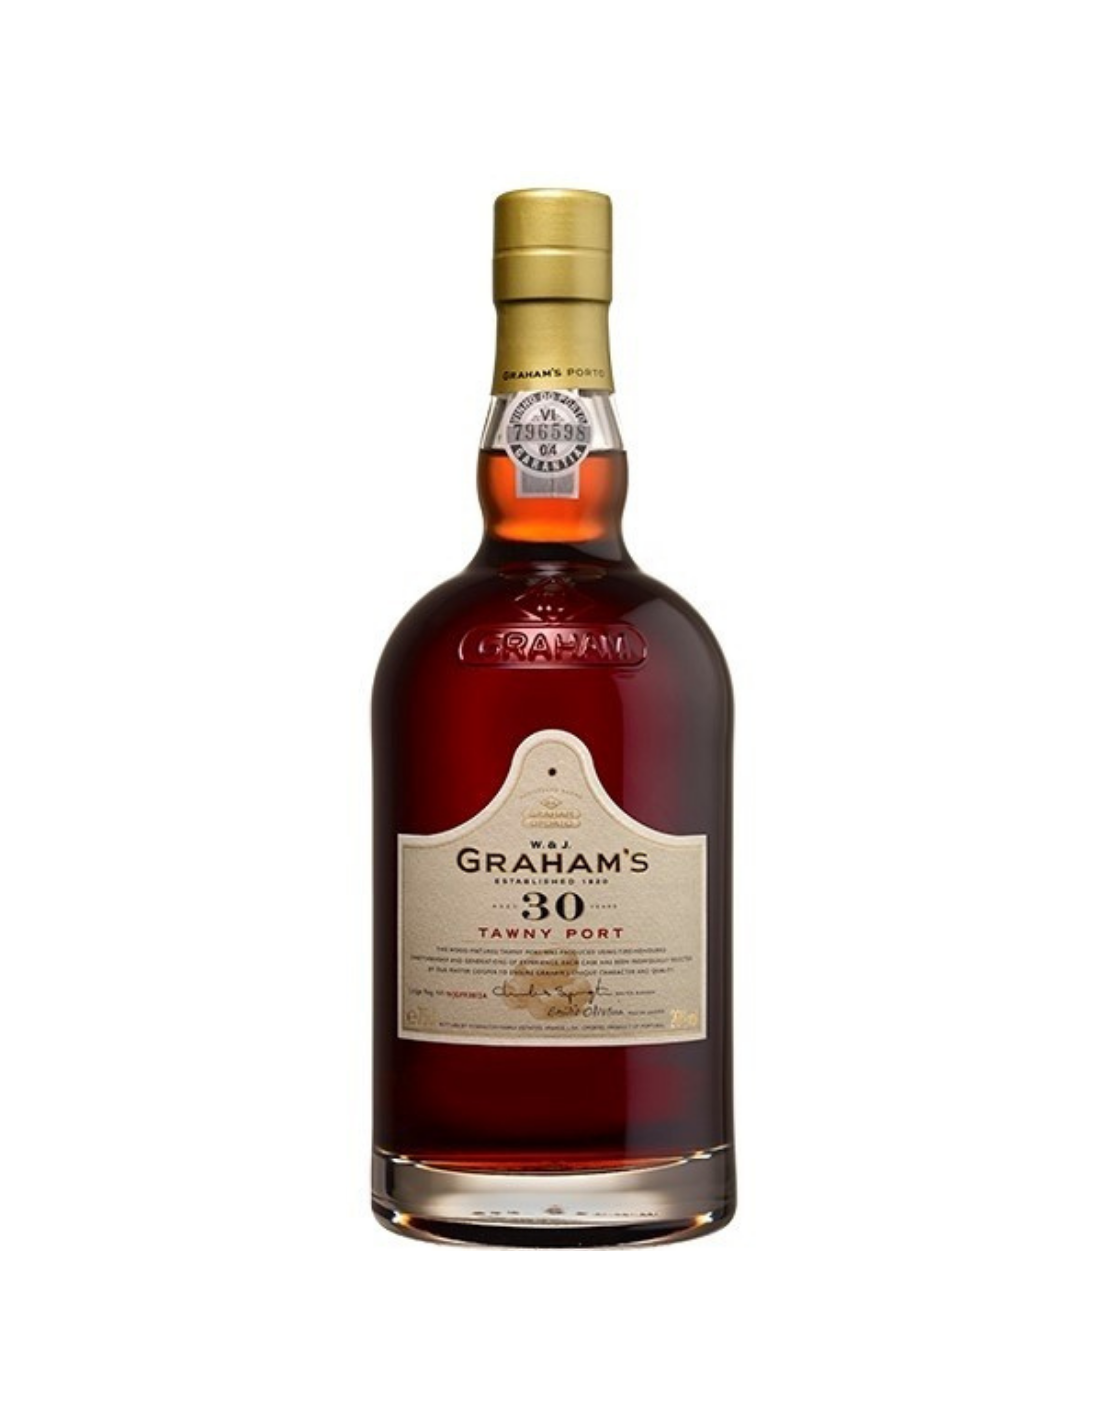 Vin rosu dulce Graham’s 30 Year Old Tawny Port, 0.75L, 20% alc., Portugalia alcooldiscount.ro